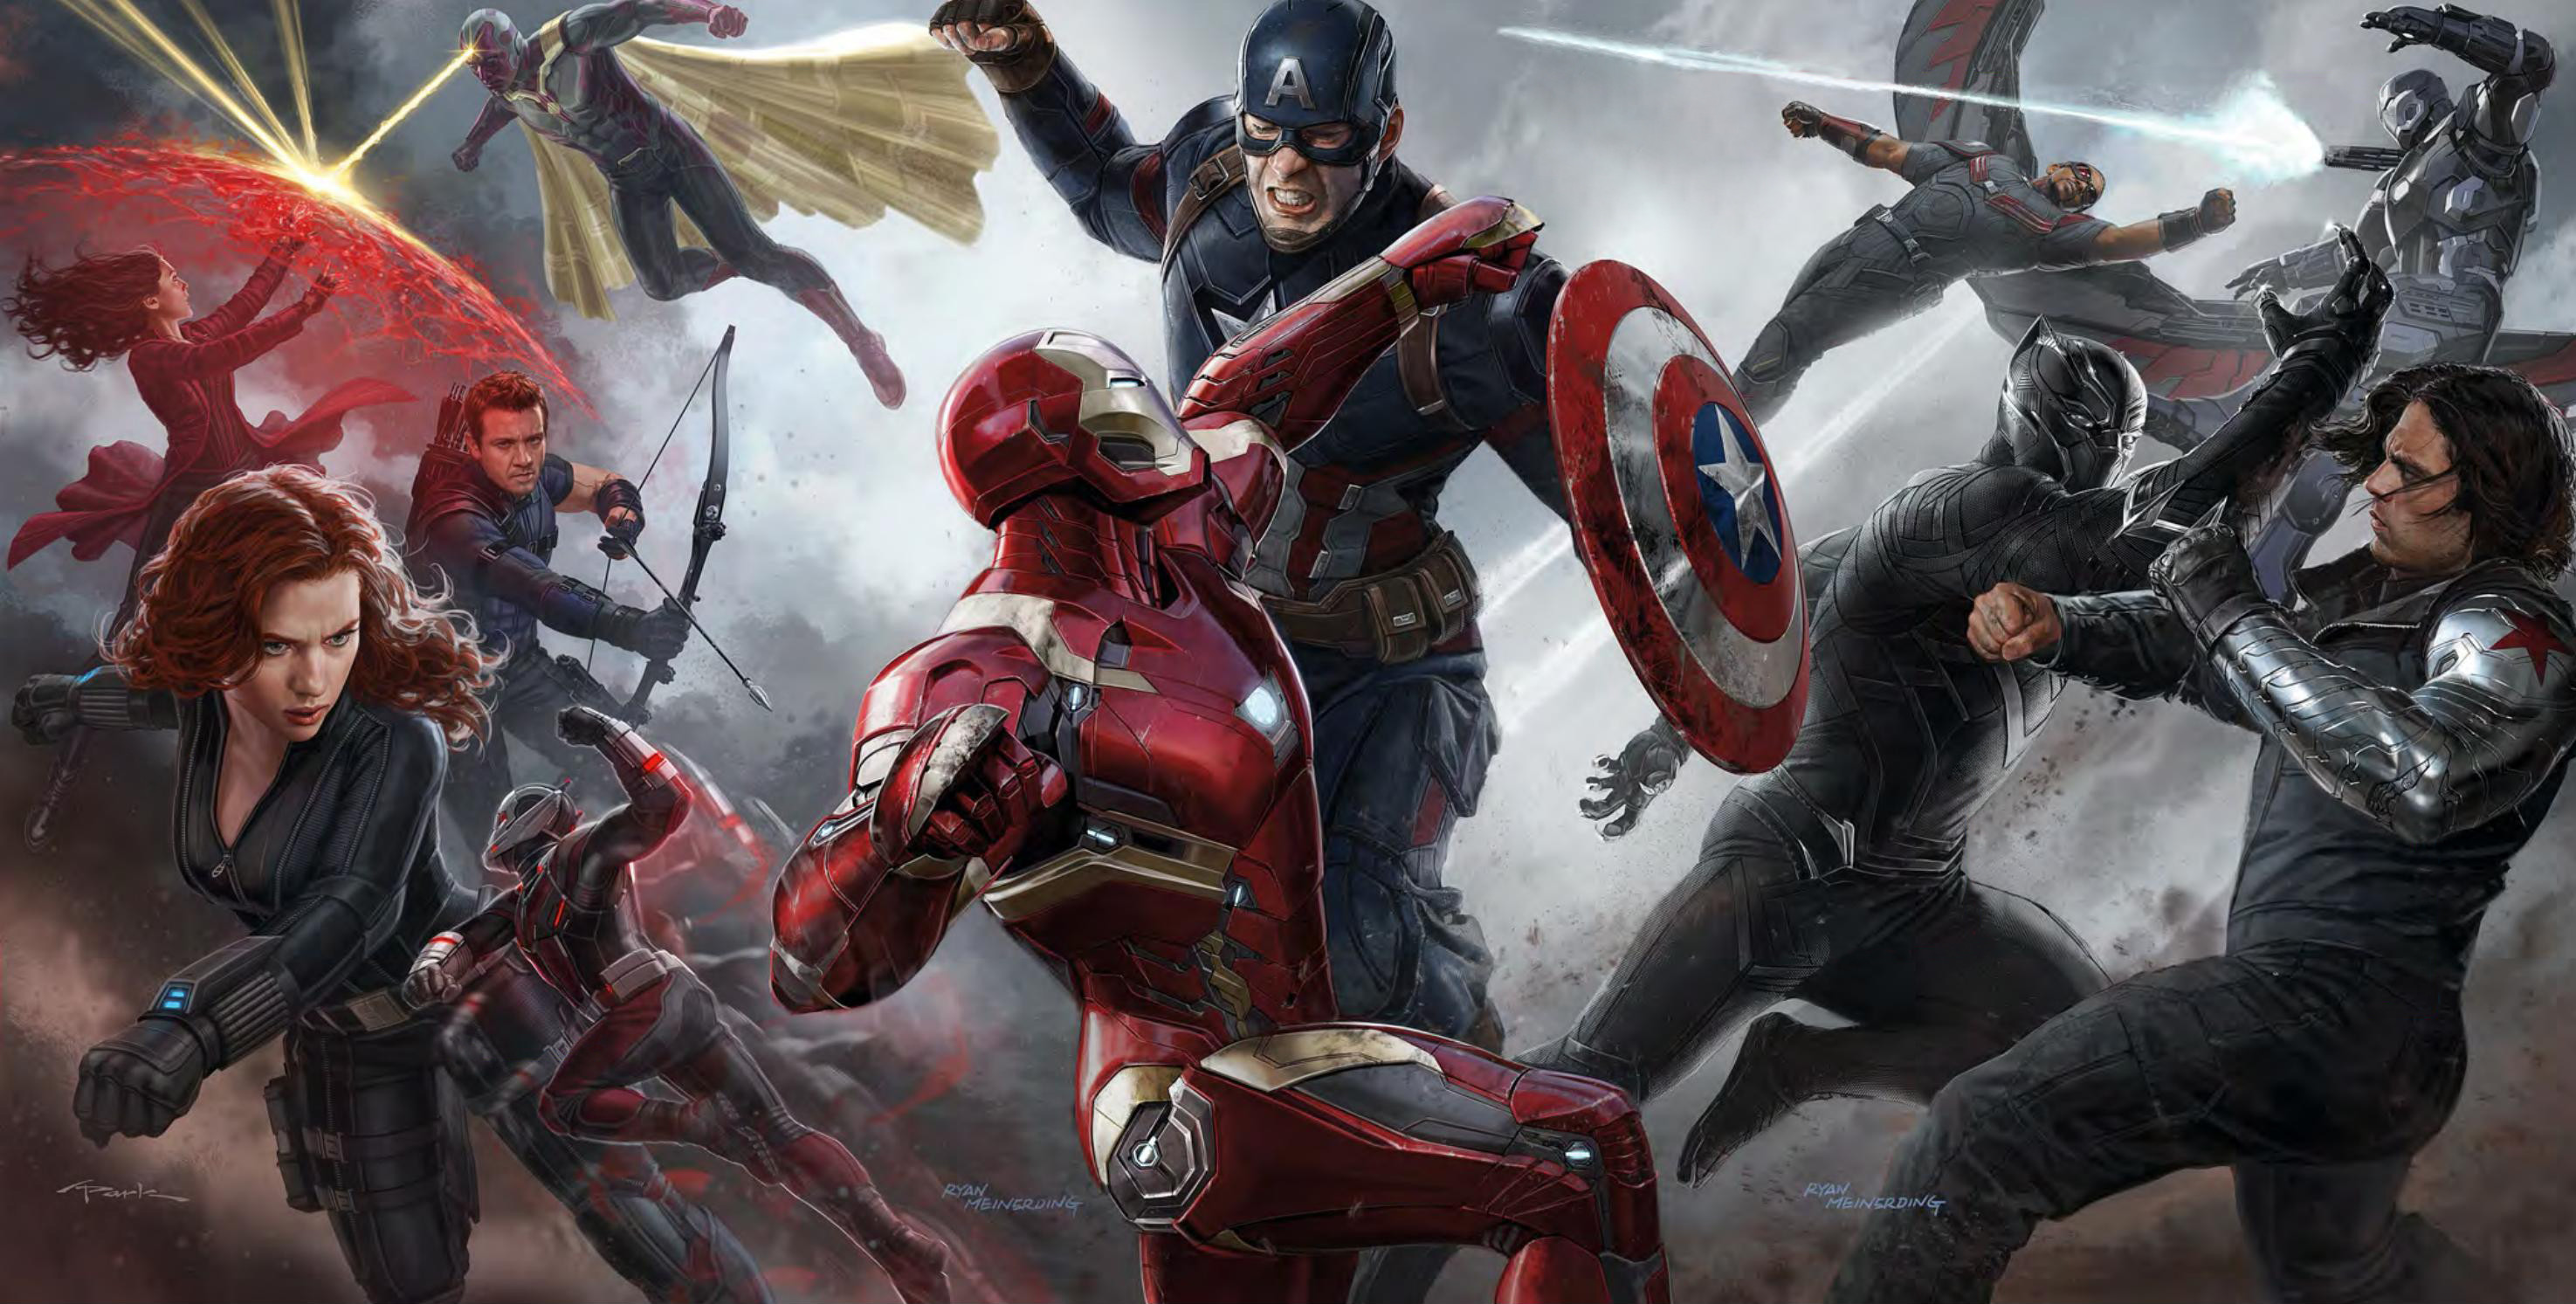 Captain America Civil War HD